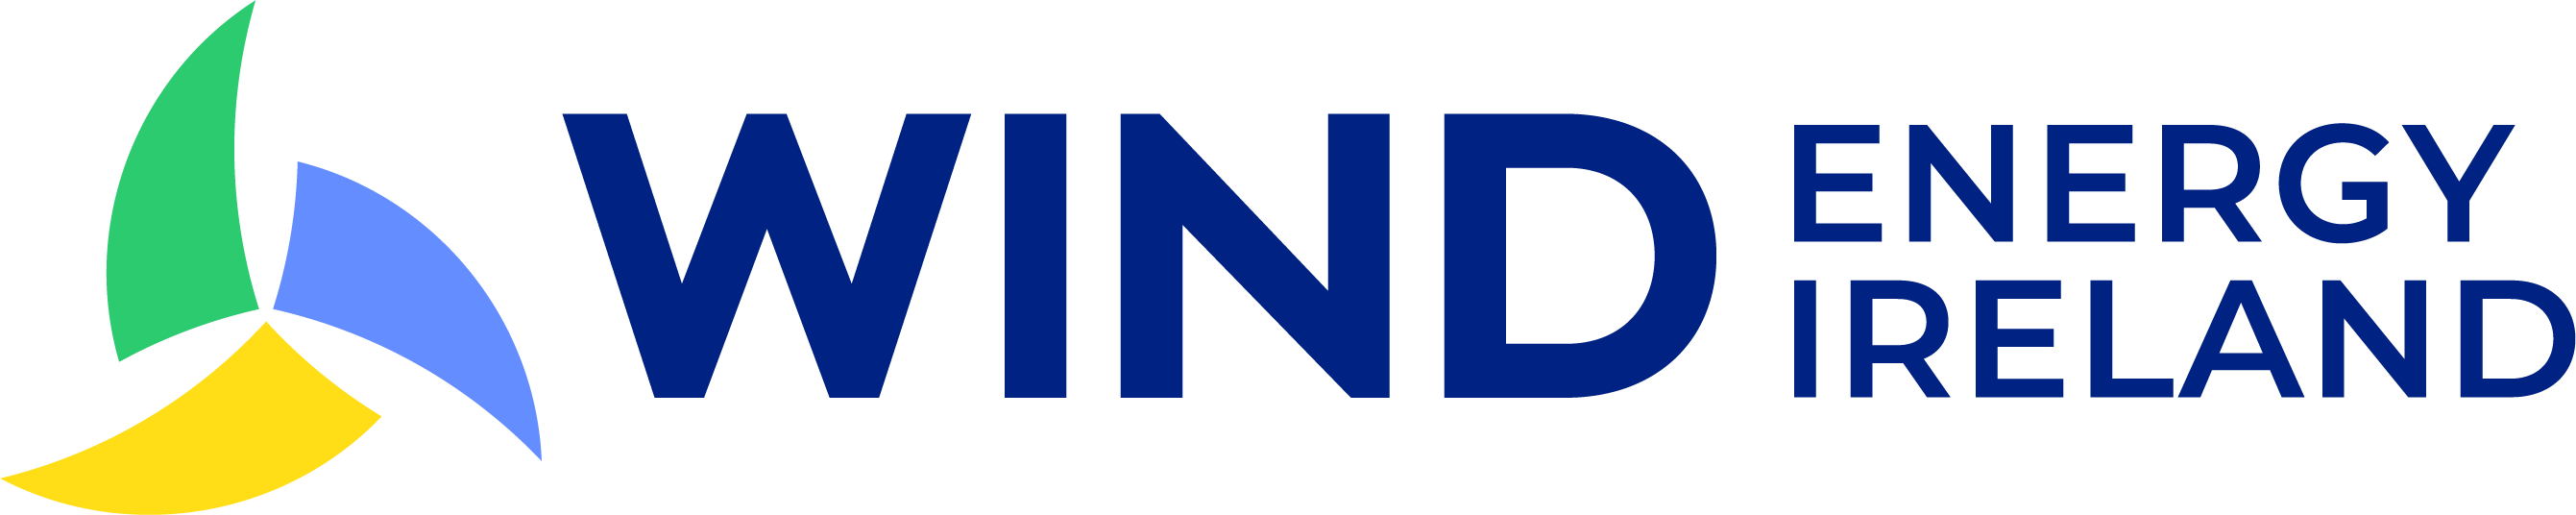 Wind Energy Ireland Logo-2